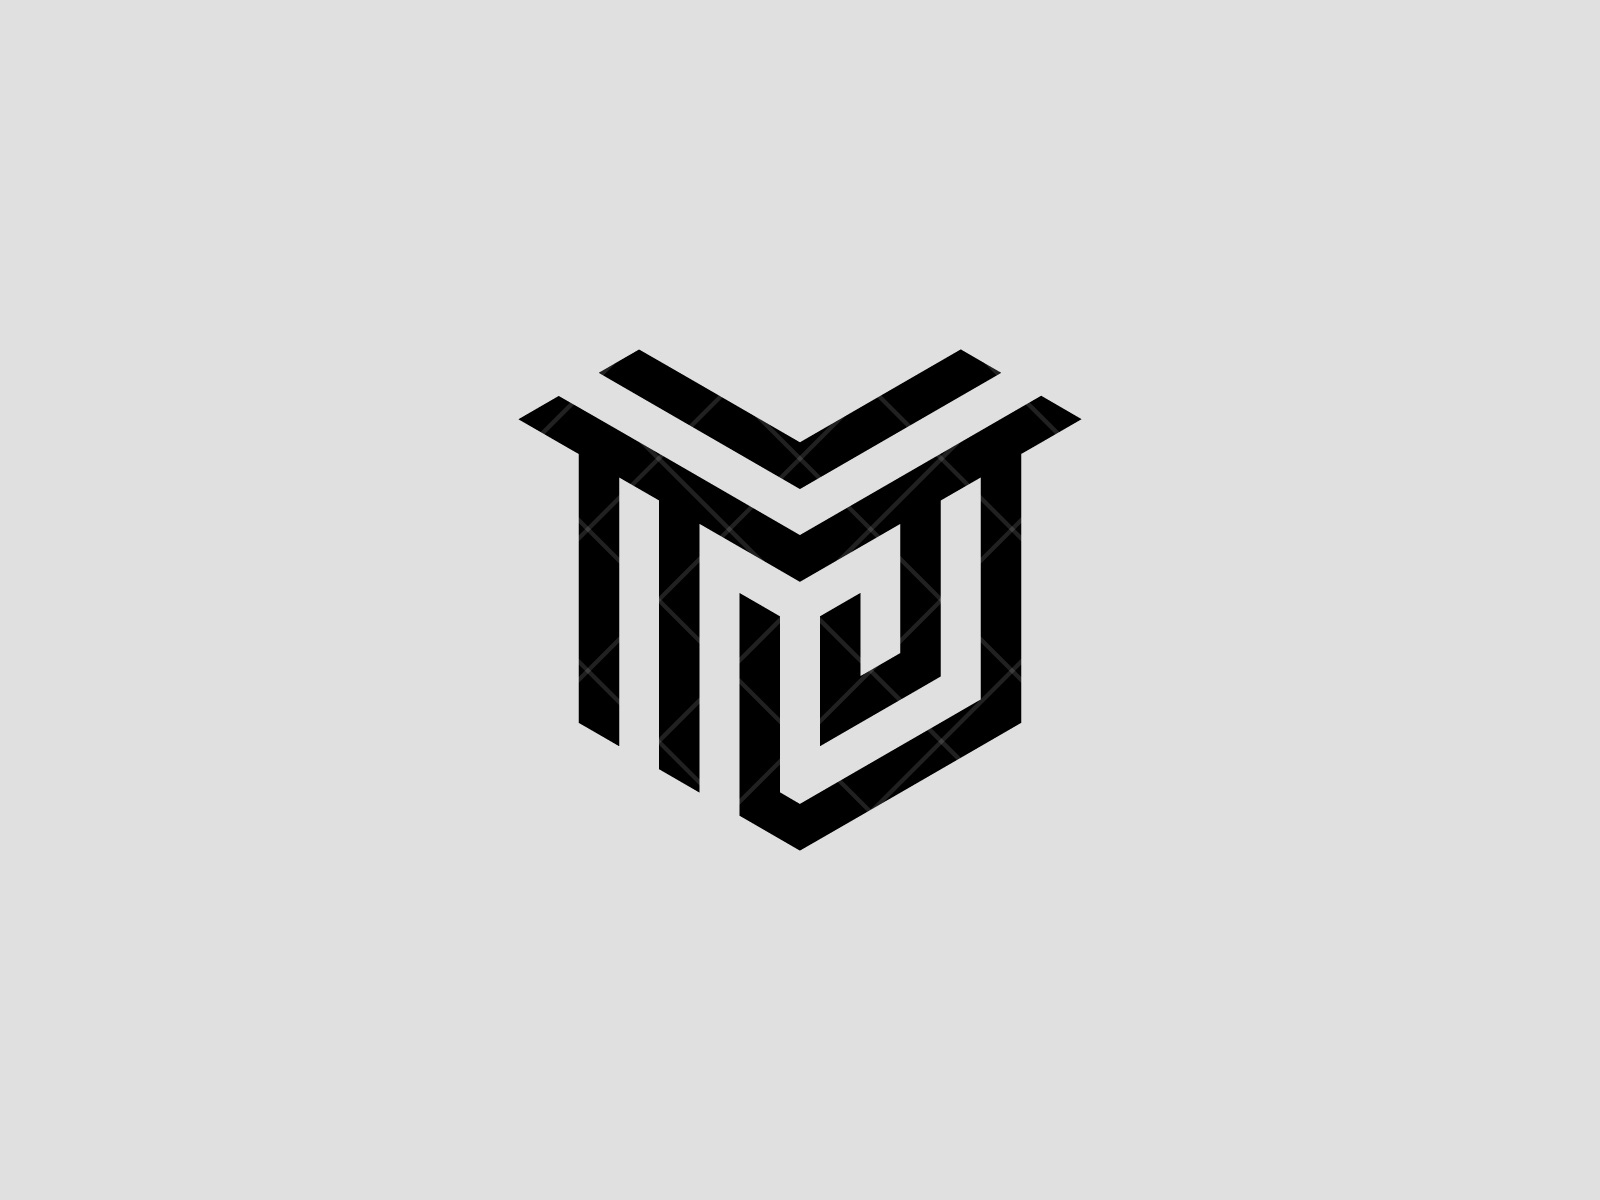 mj logo wallpaper